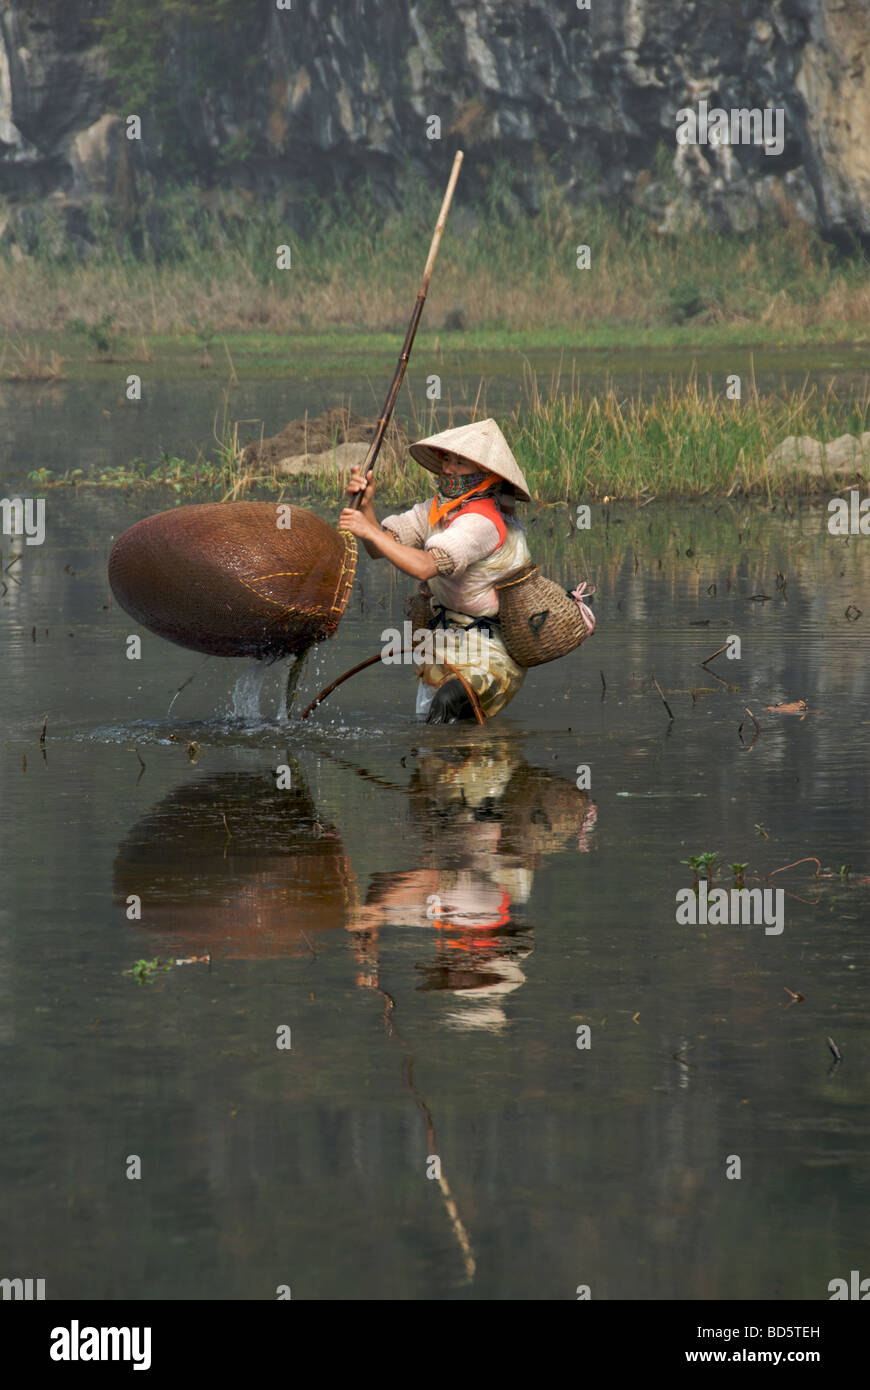 Catching fresh water shrimps Ngo Dong River Tam Coc Ninh Binh Province Northern Vietnam Stock Photo